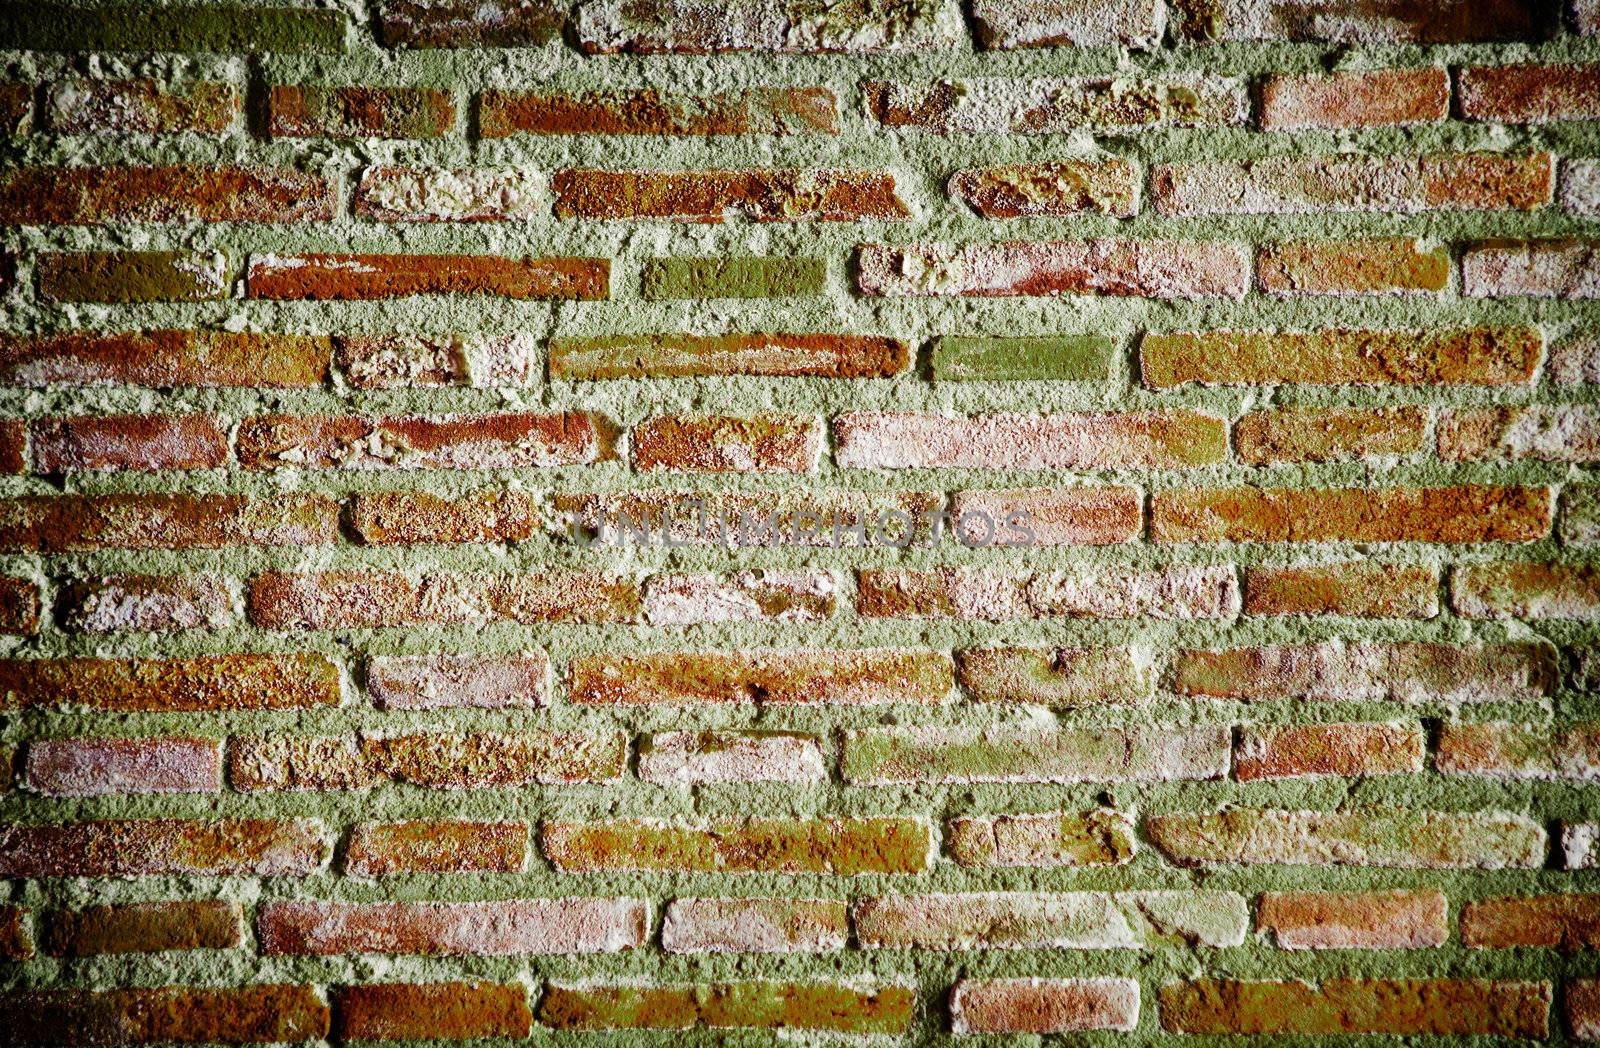 Detail of old brick wall